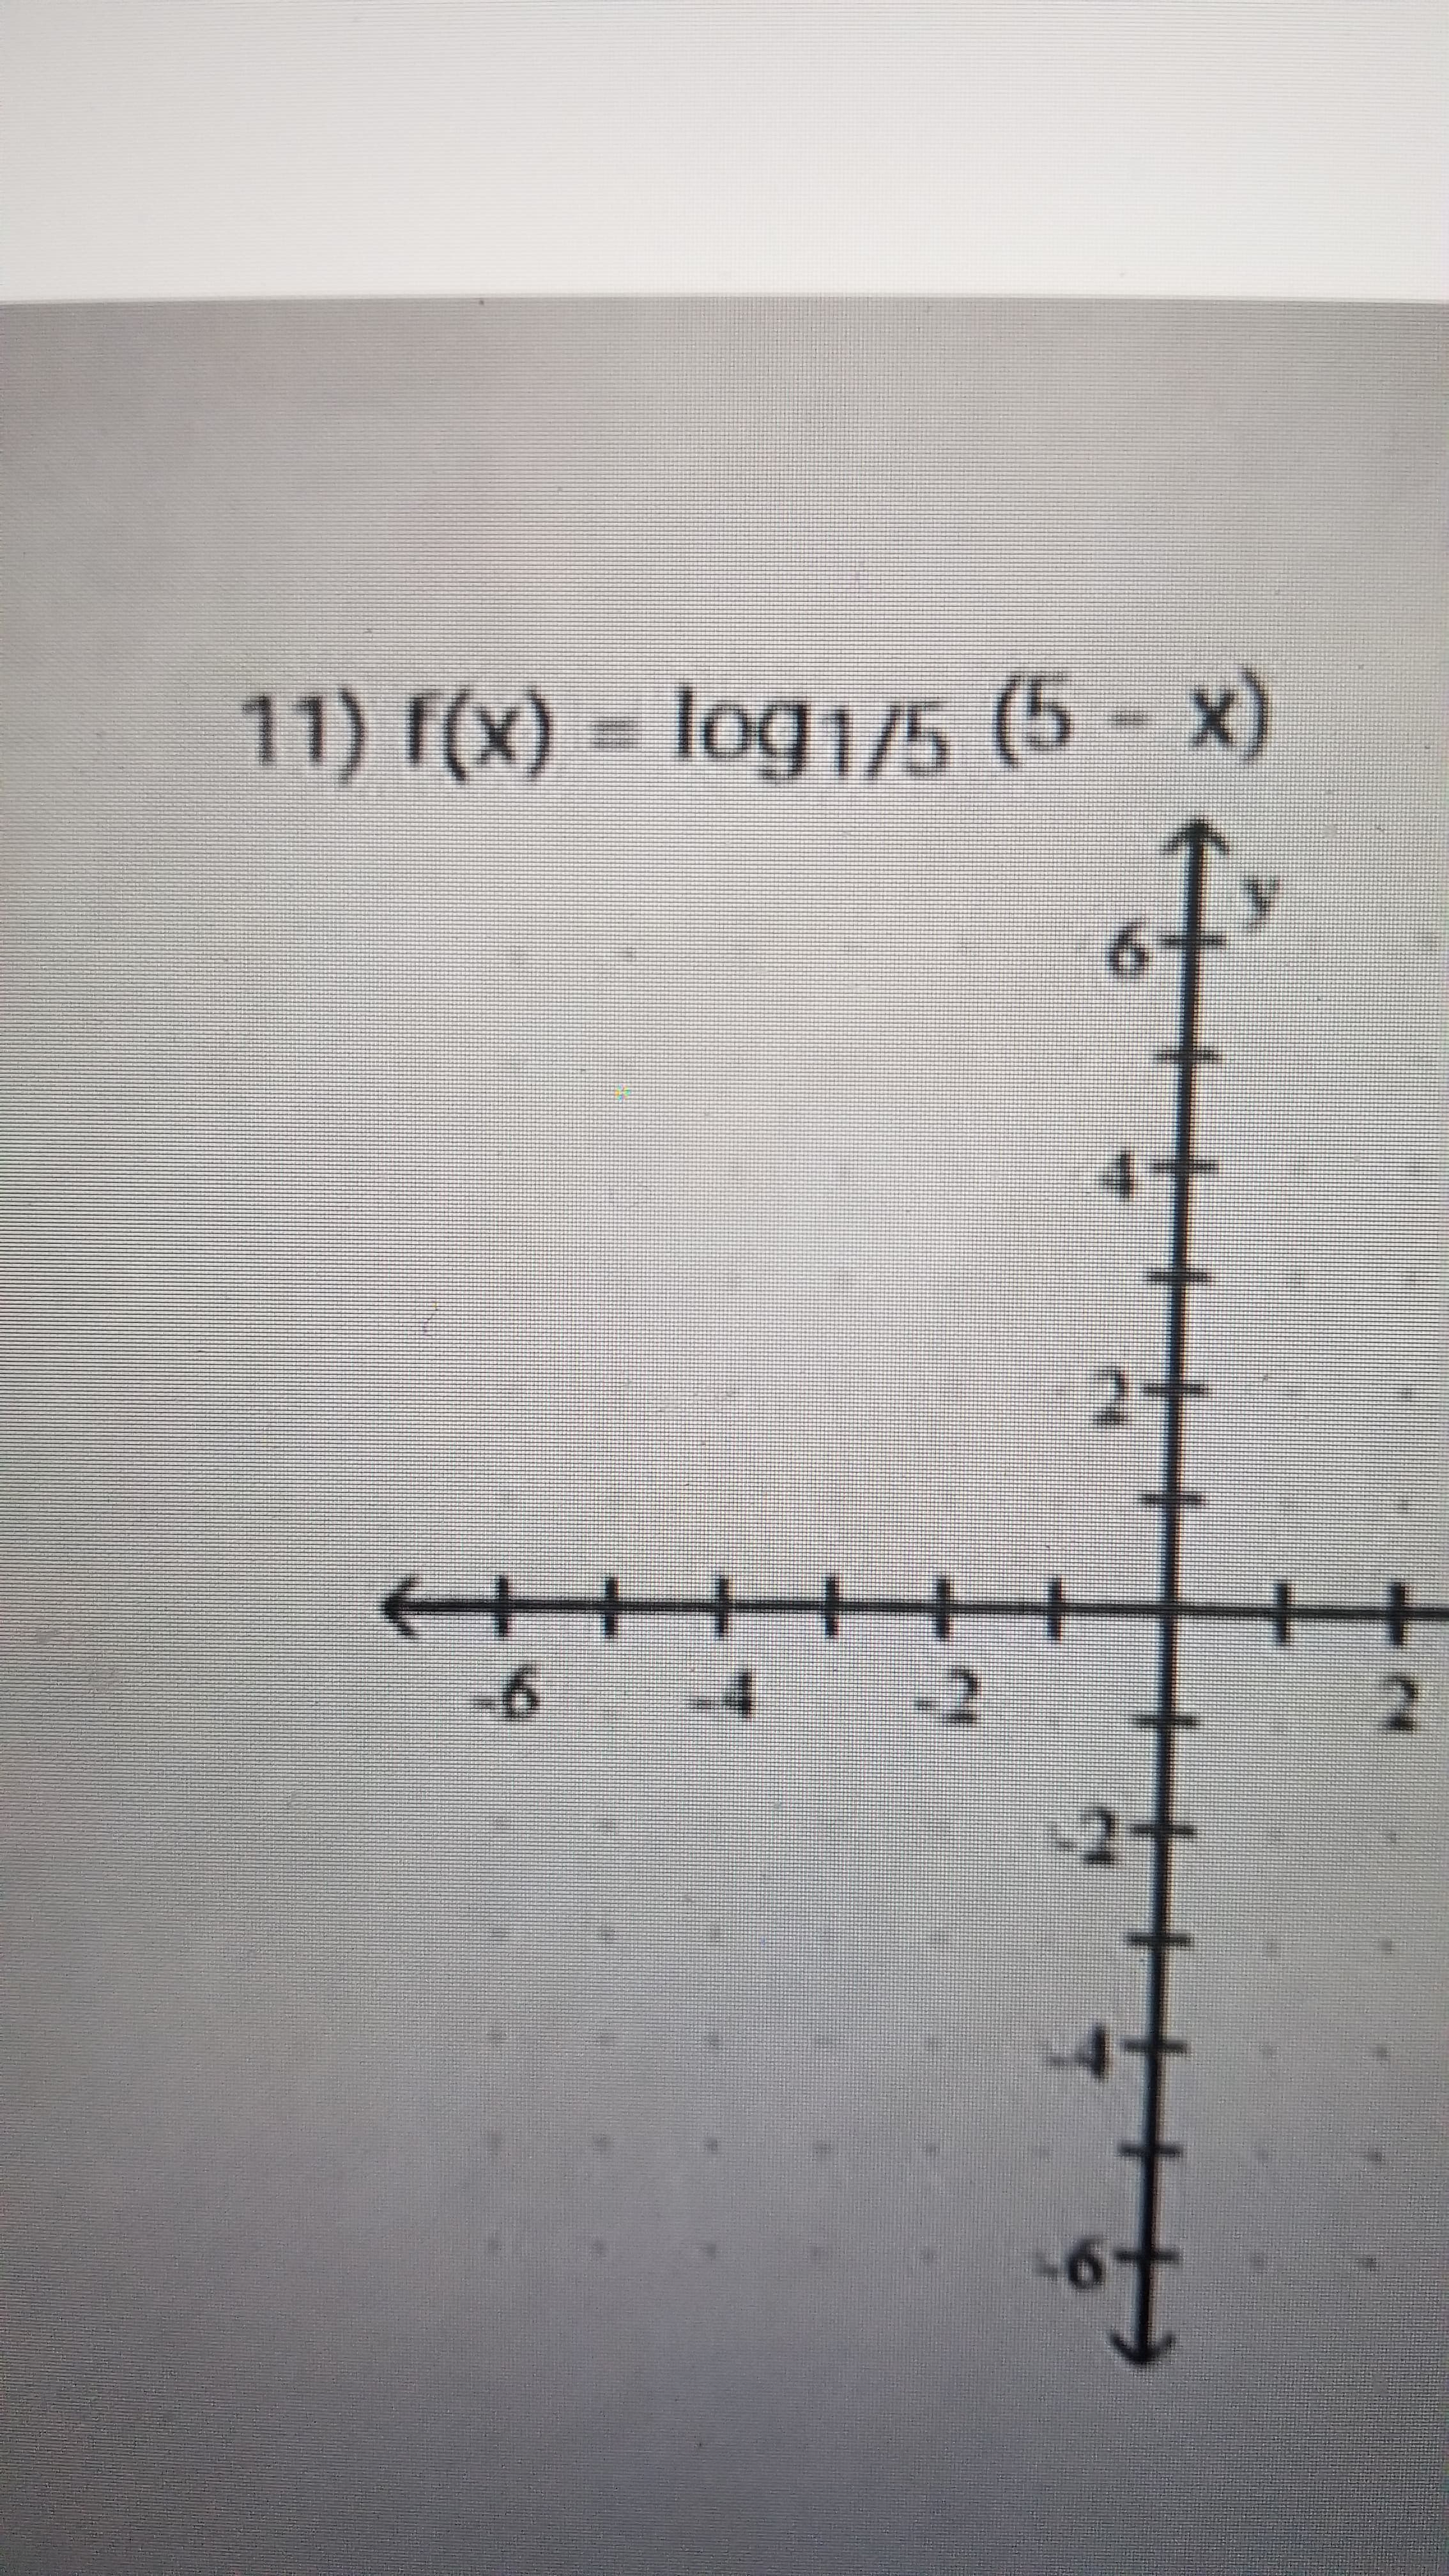 11) f(x) = log1/5 (5 - x)
-6 4
9.
-6
